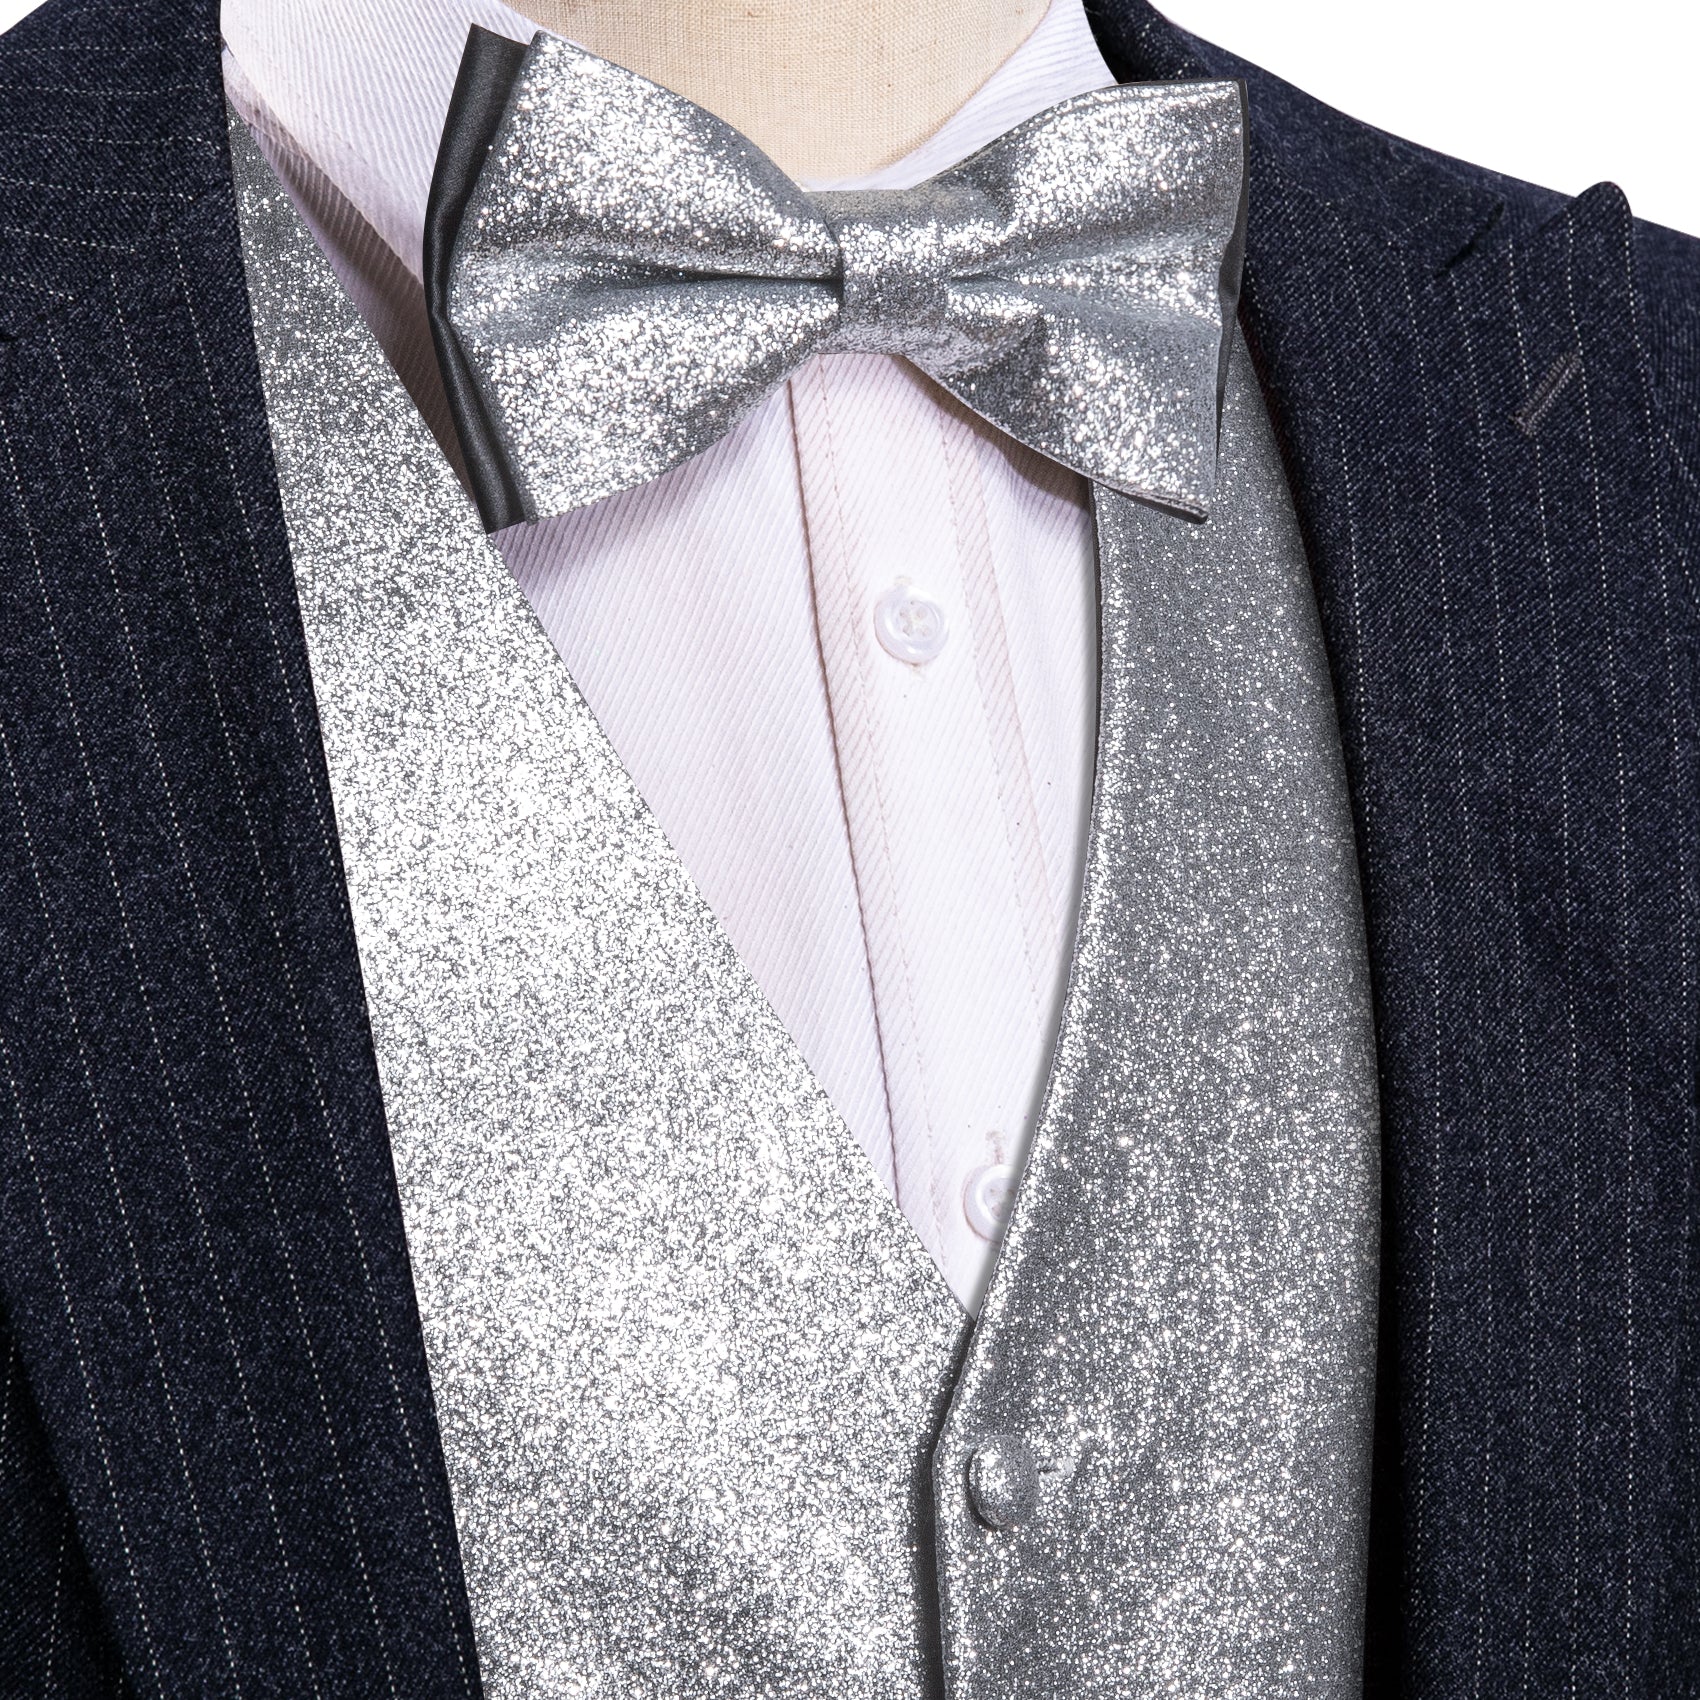 Shining Men's Grey Silk Bowtie V-Neck Waistcoat Vest Set